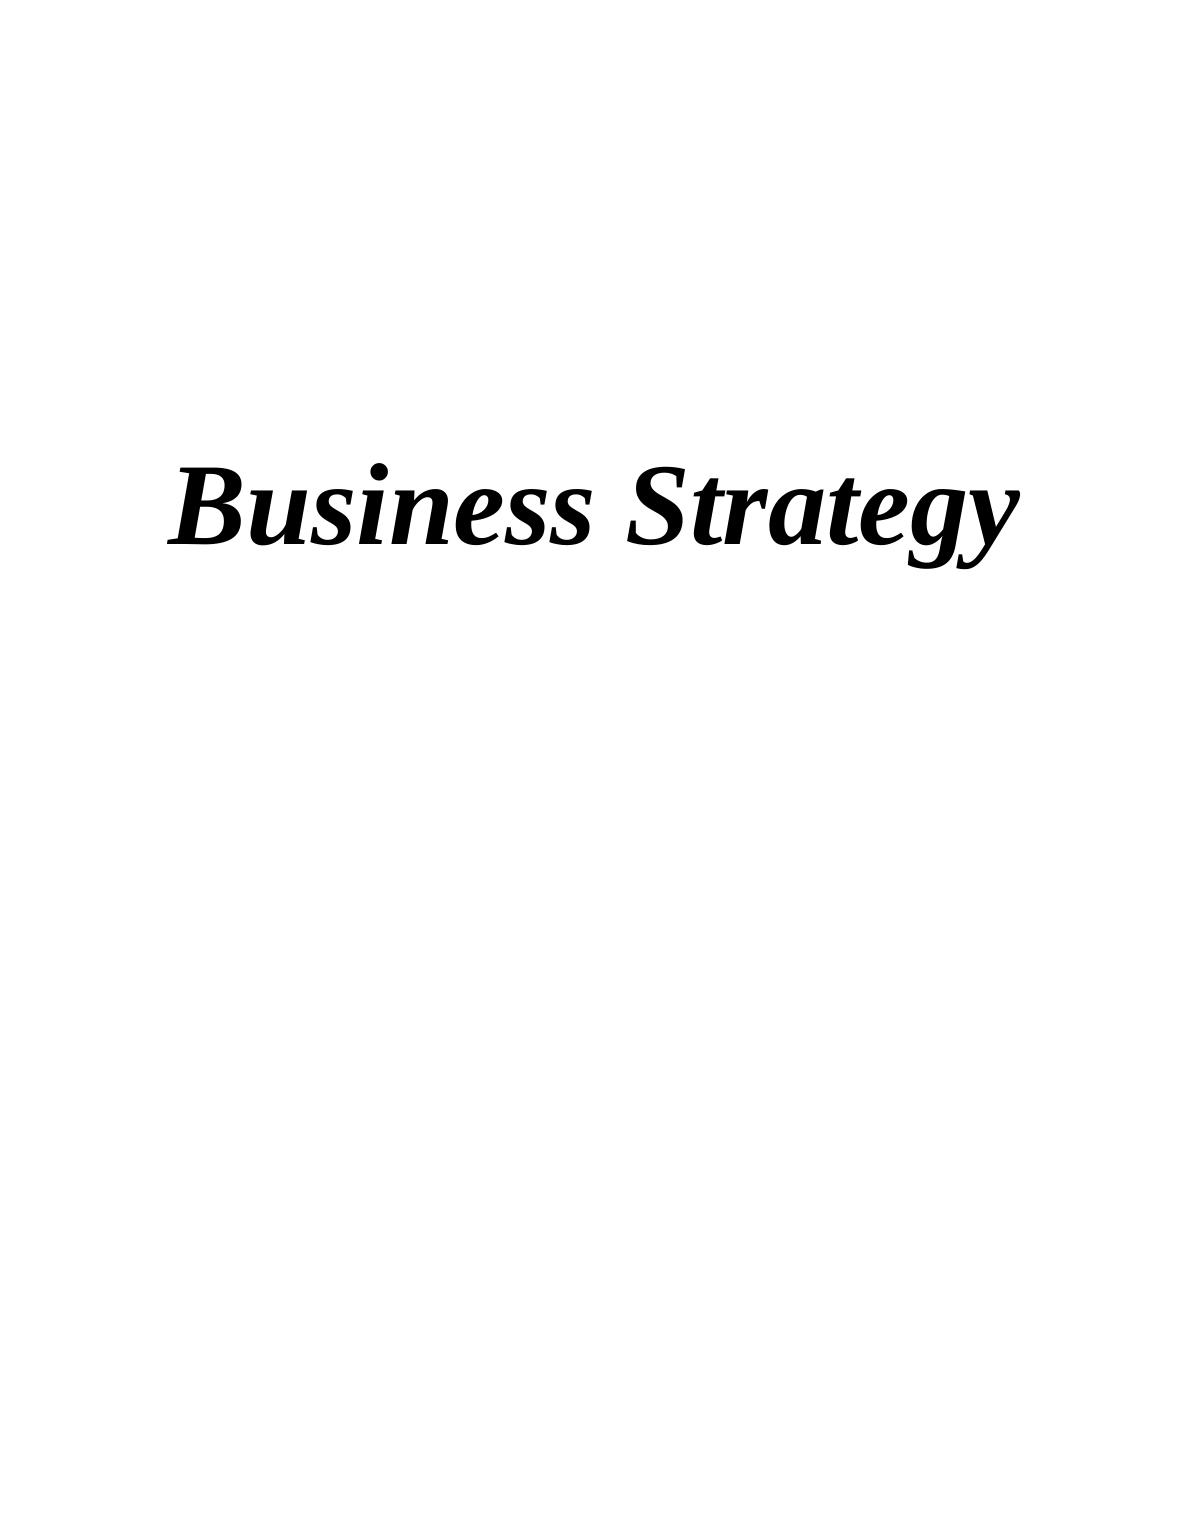 Volkswagen Business Strategy (TASK 21)_1